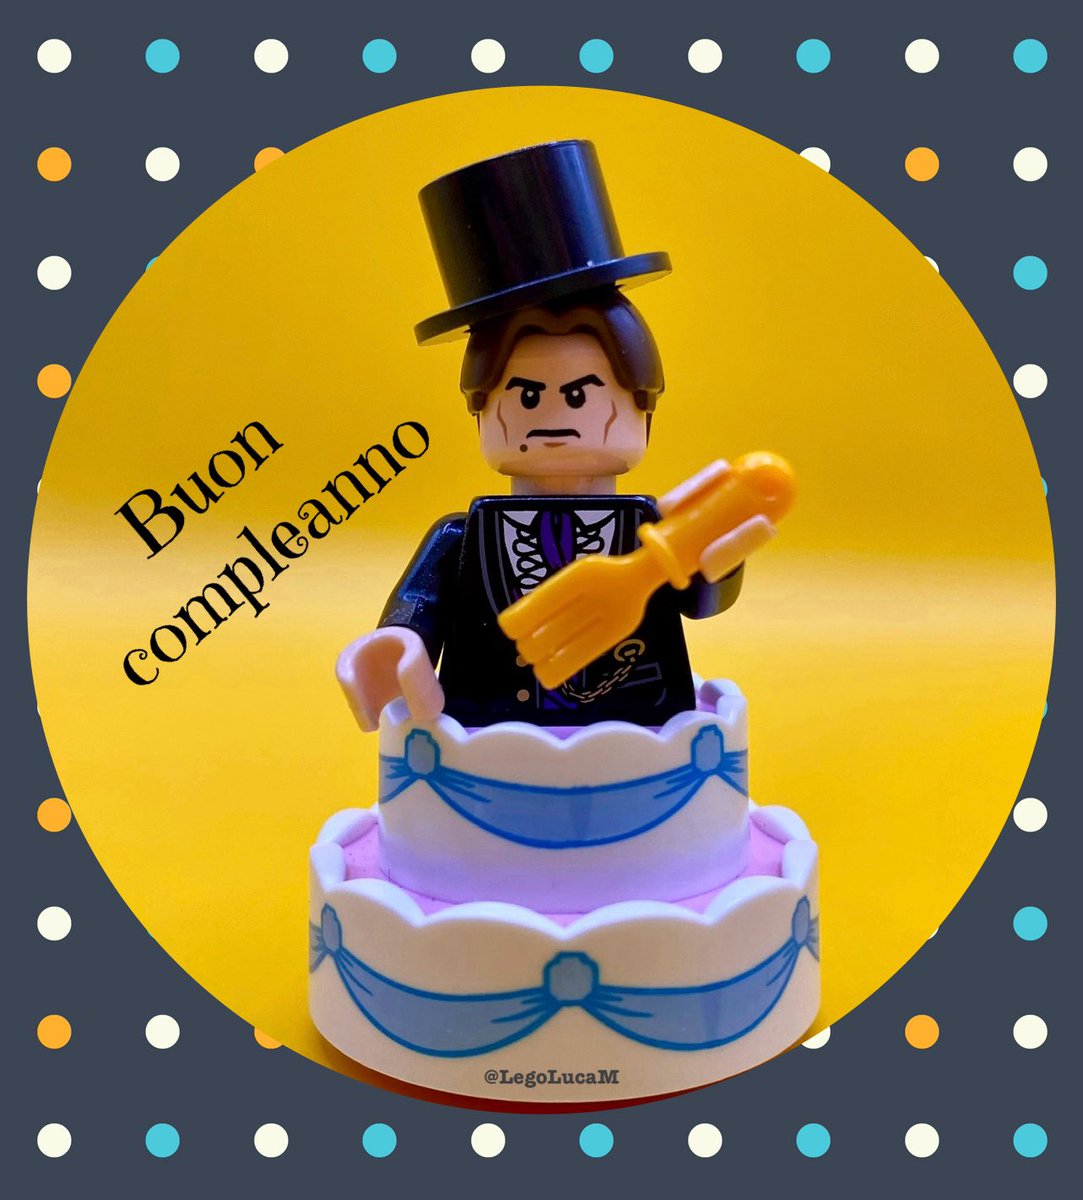 Buon compleanno Luca! 

#LucaMarinelli #MickeyMiranda #DiePfeilerDerMacht #Lego #Legography #LegoMiniFigs